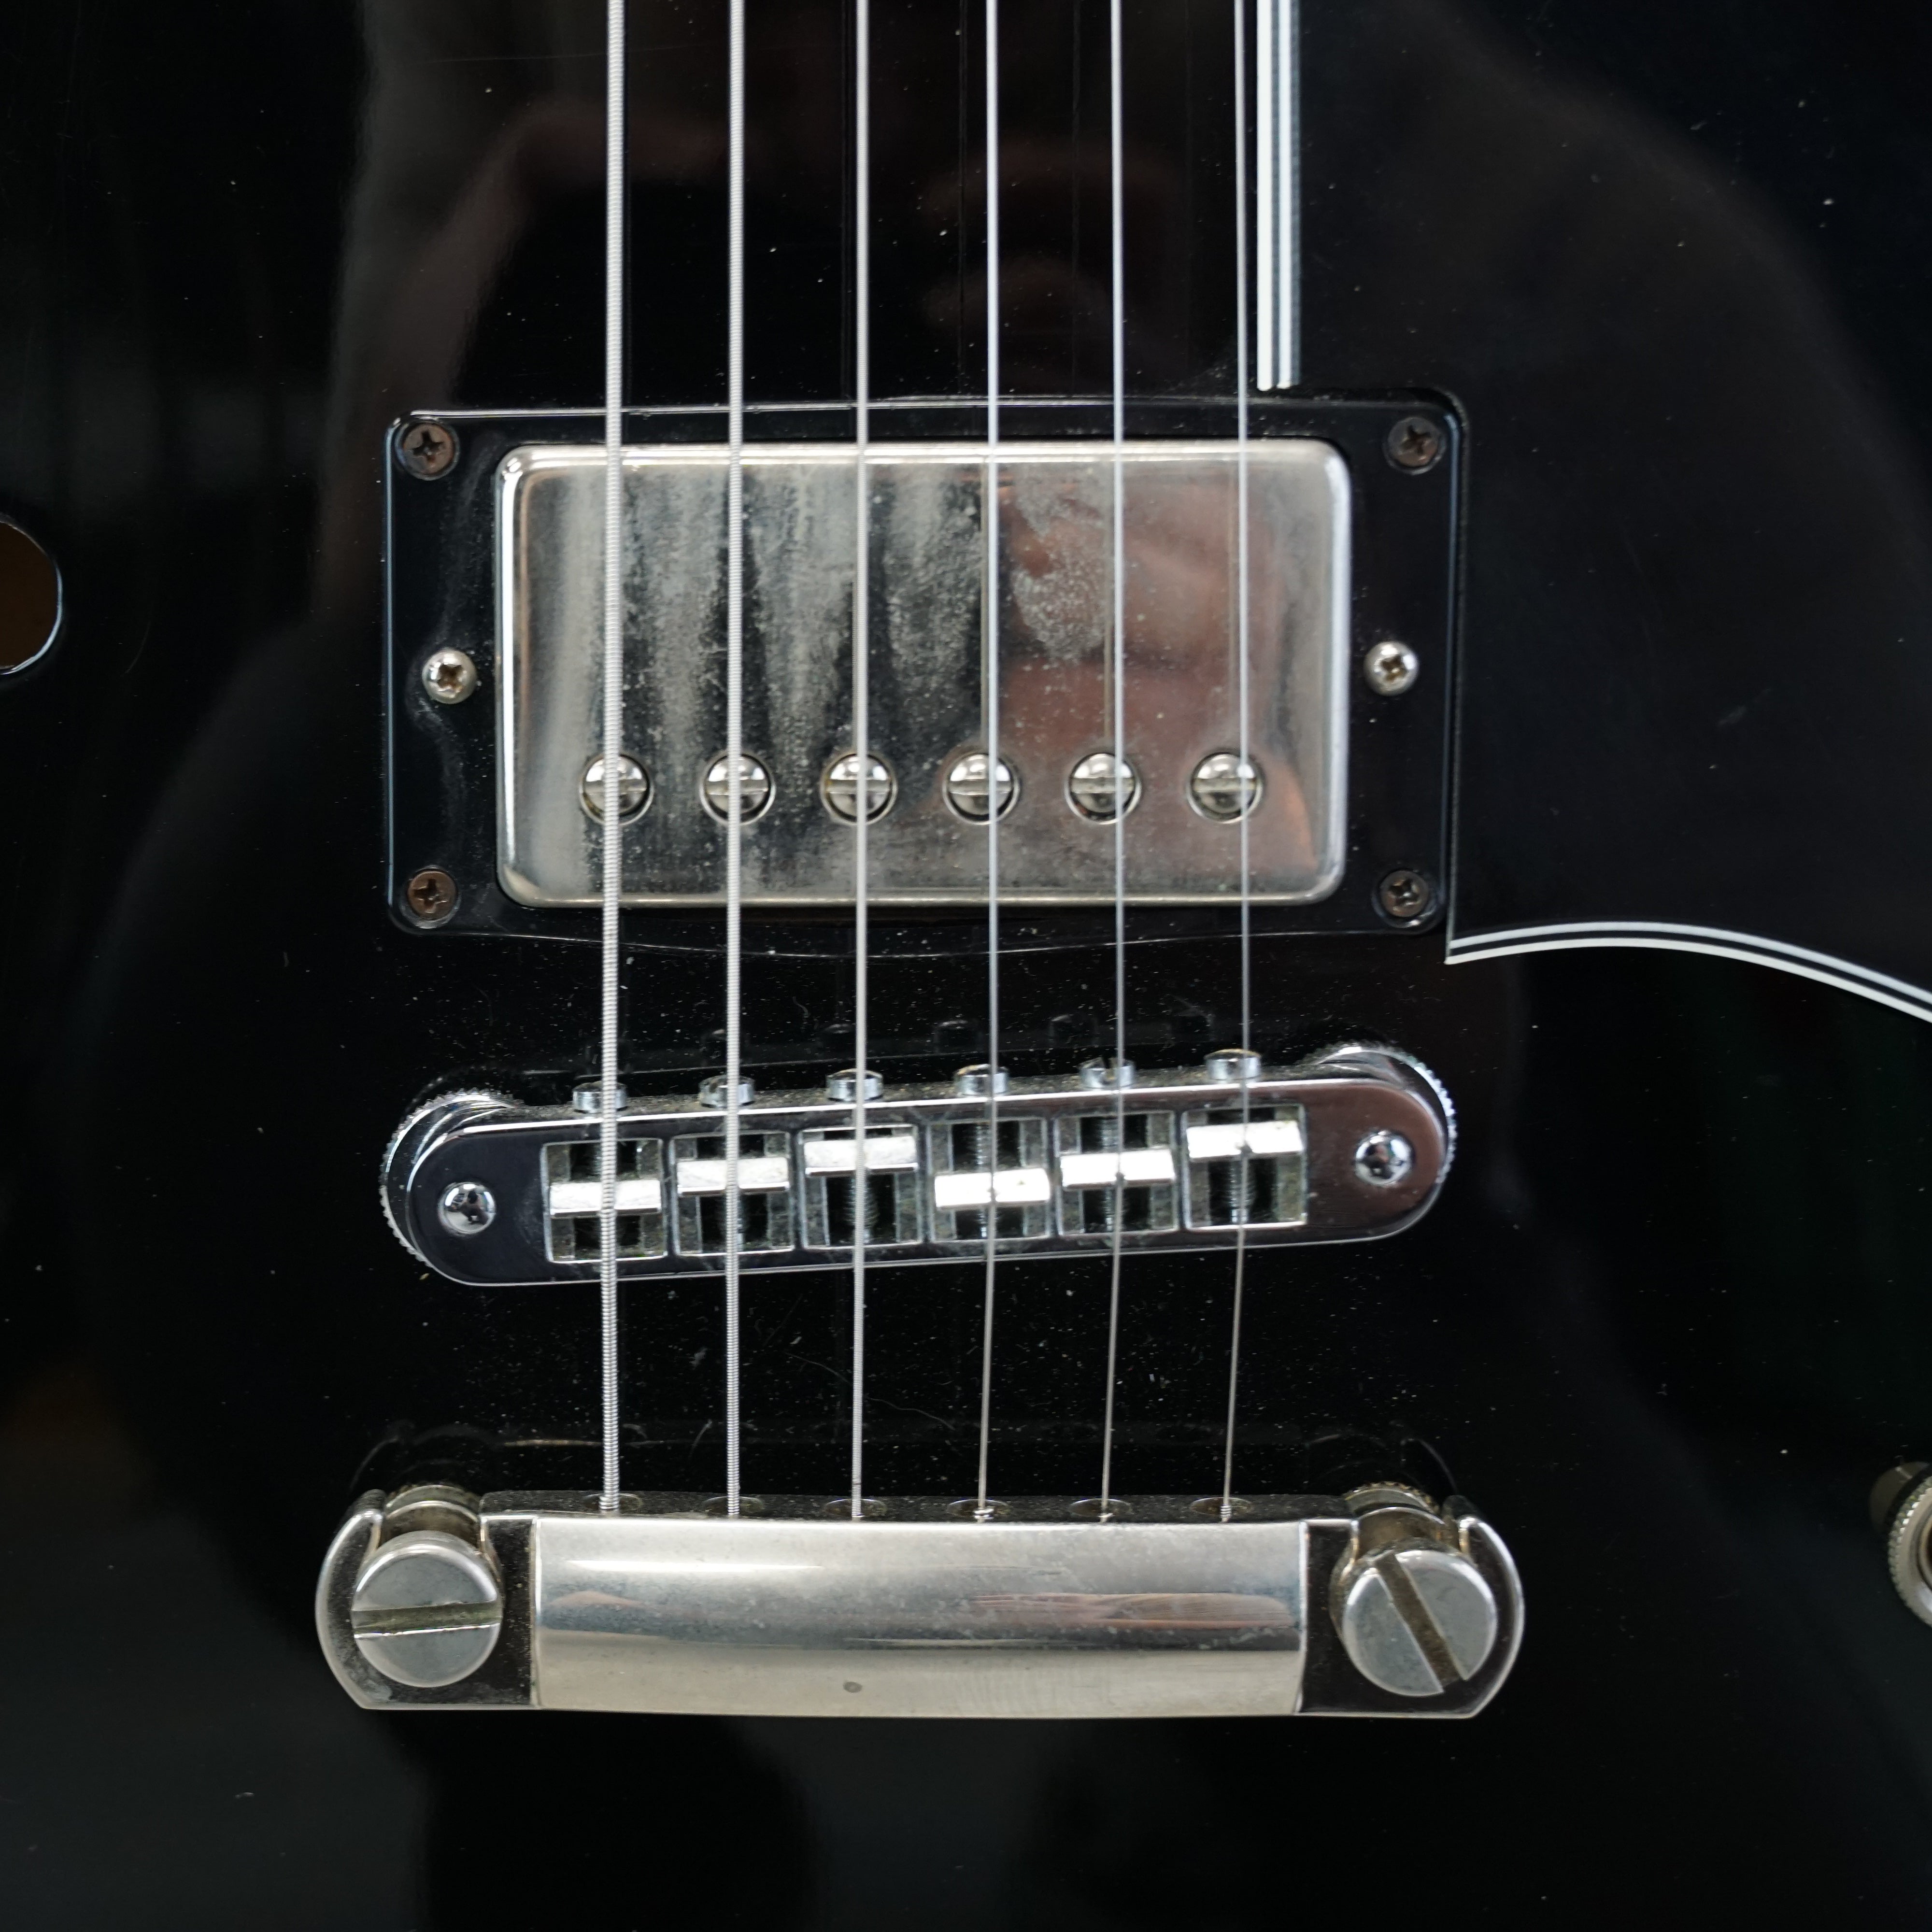 Gibson ES-335 Dot Black - 1982